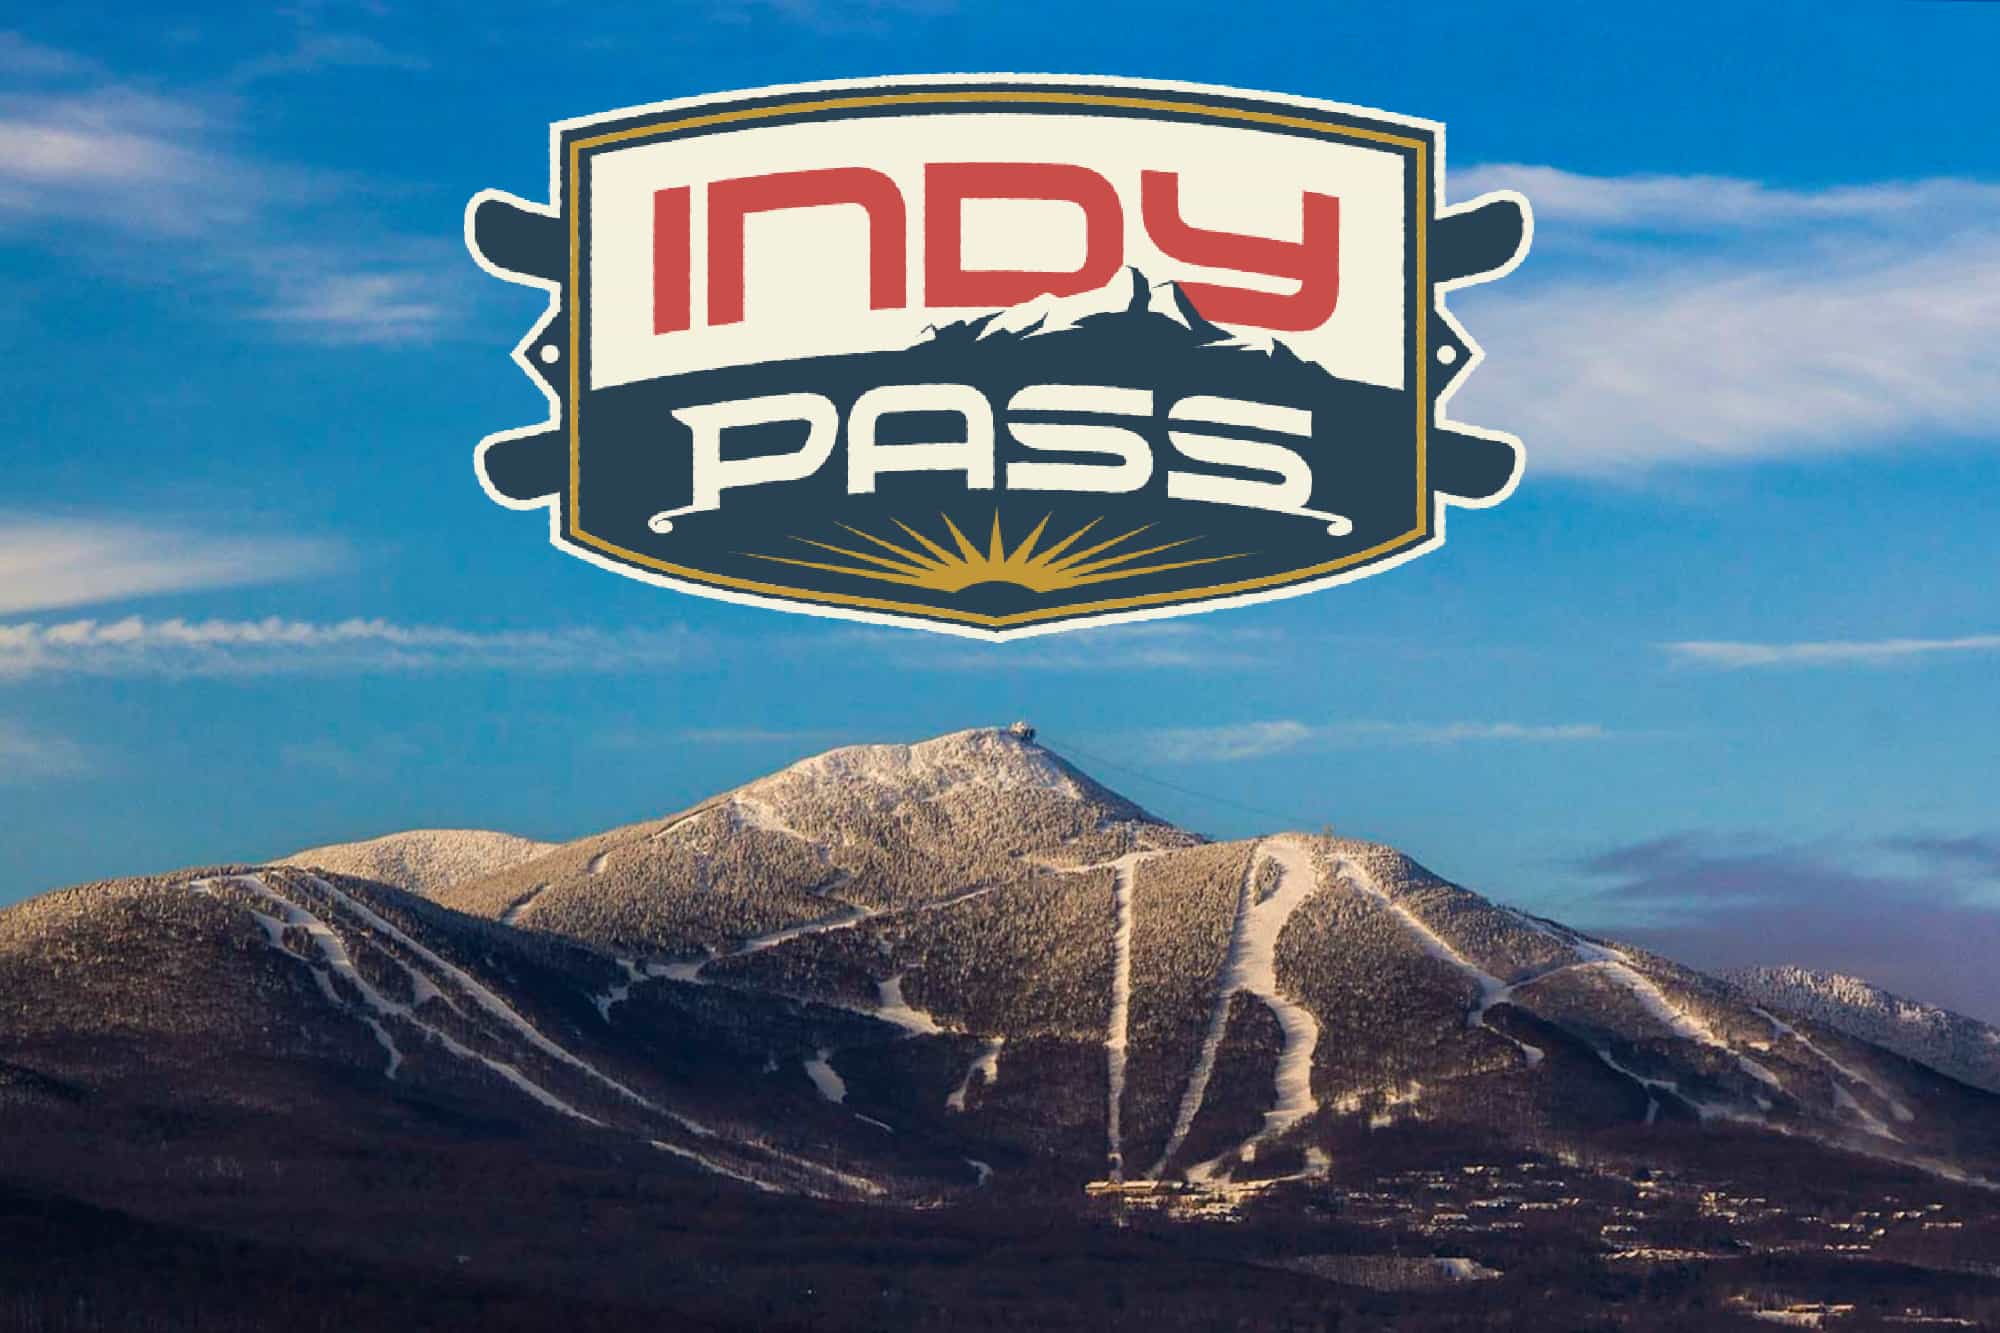 Indy Pass